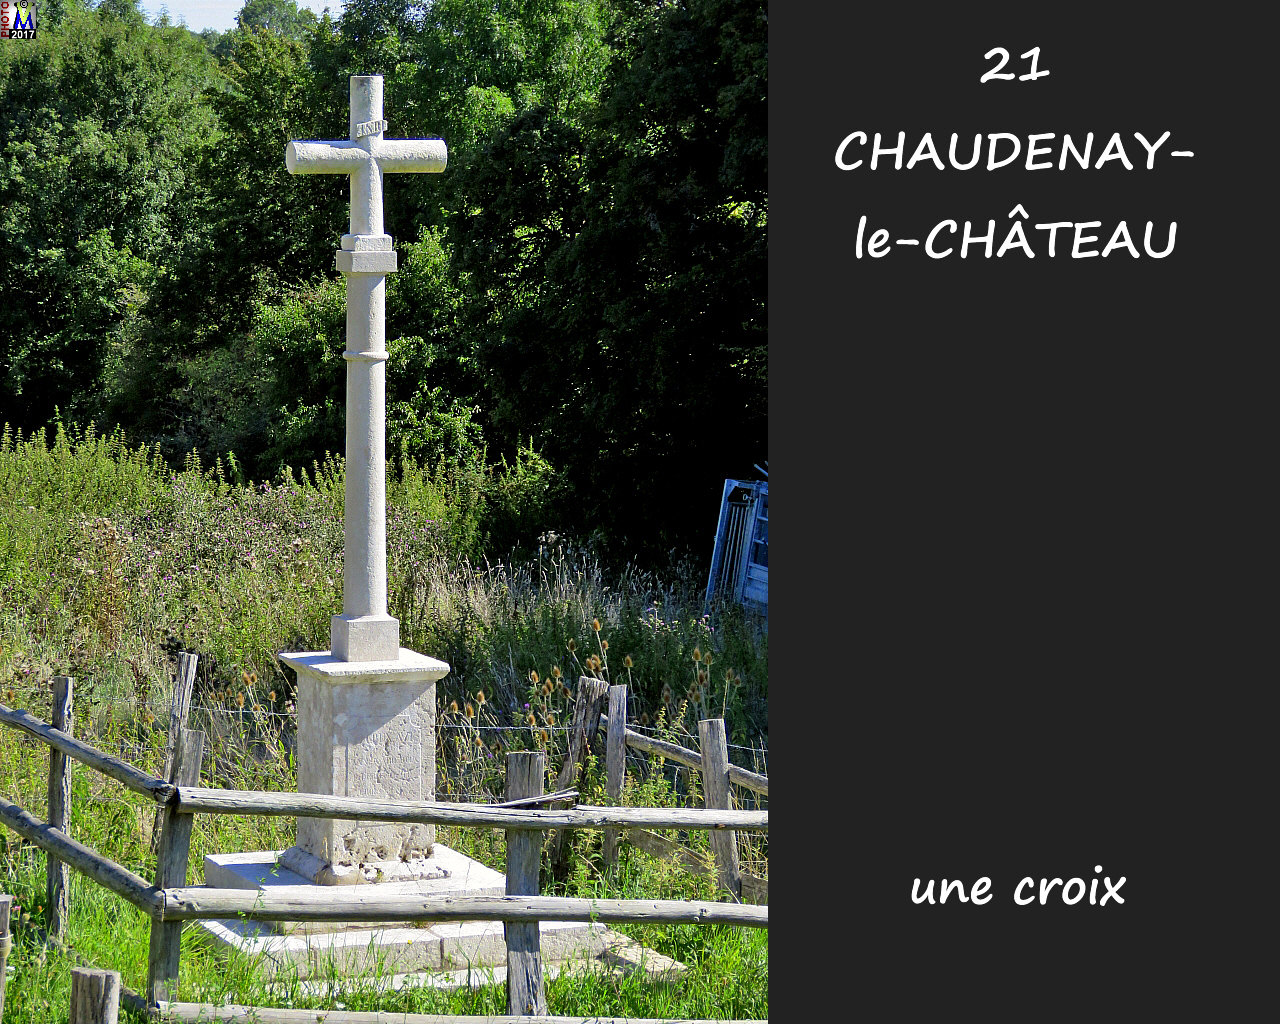 21CHAUDENAY-le-CHATEAU_croix_100.jpg